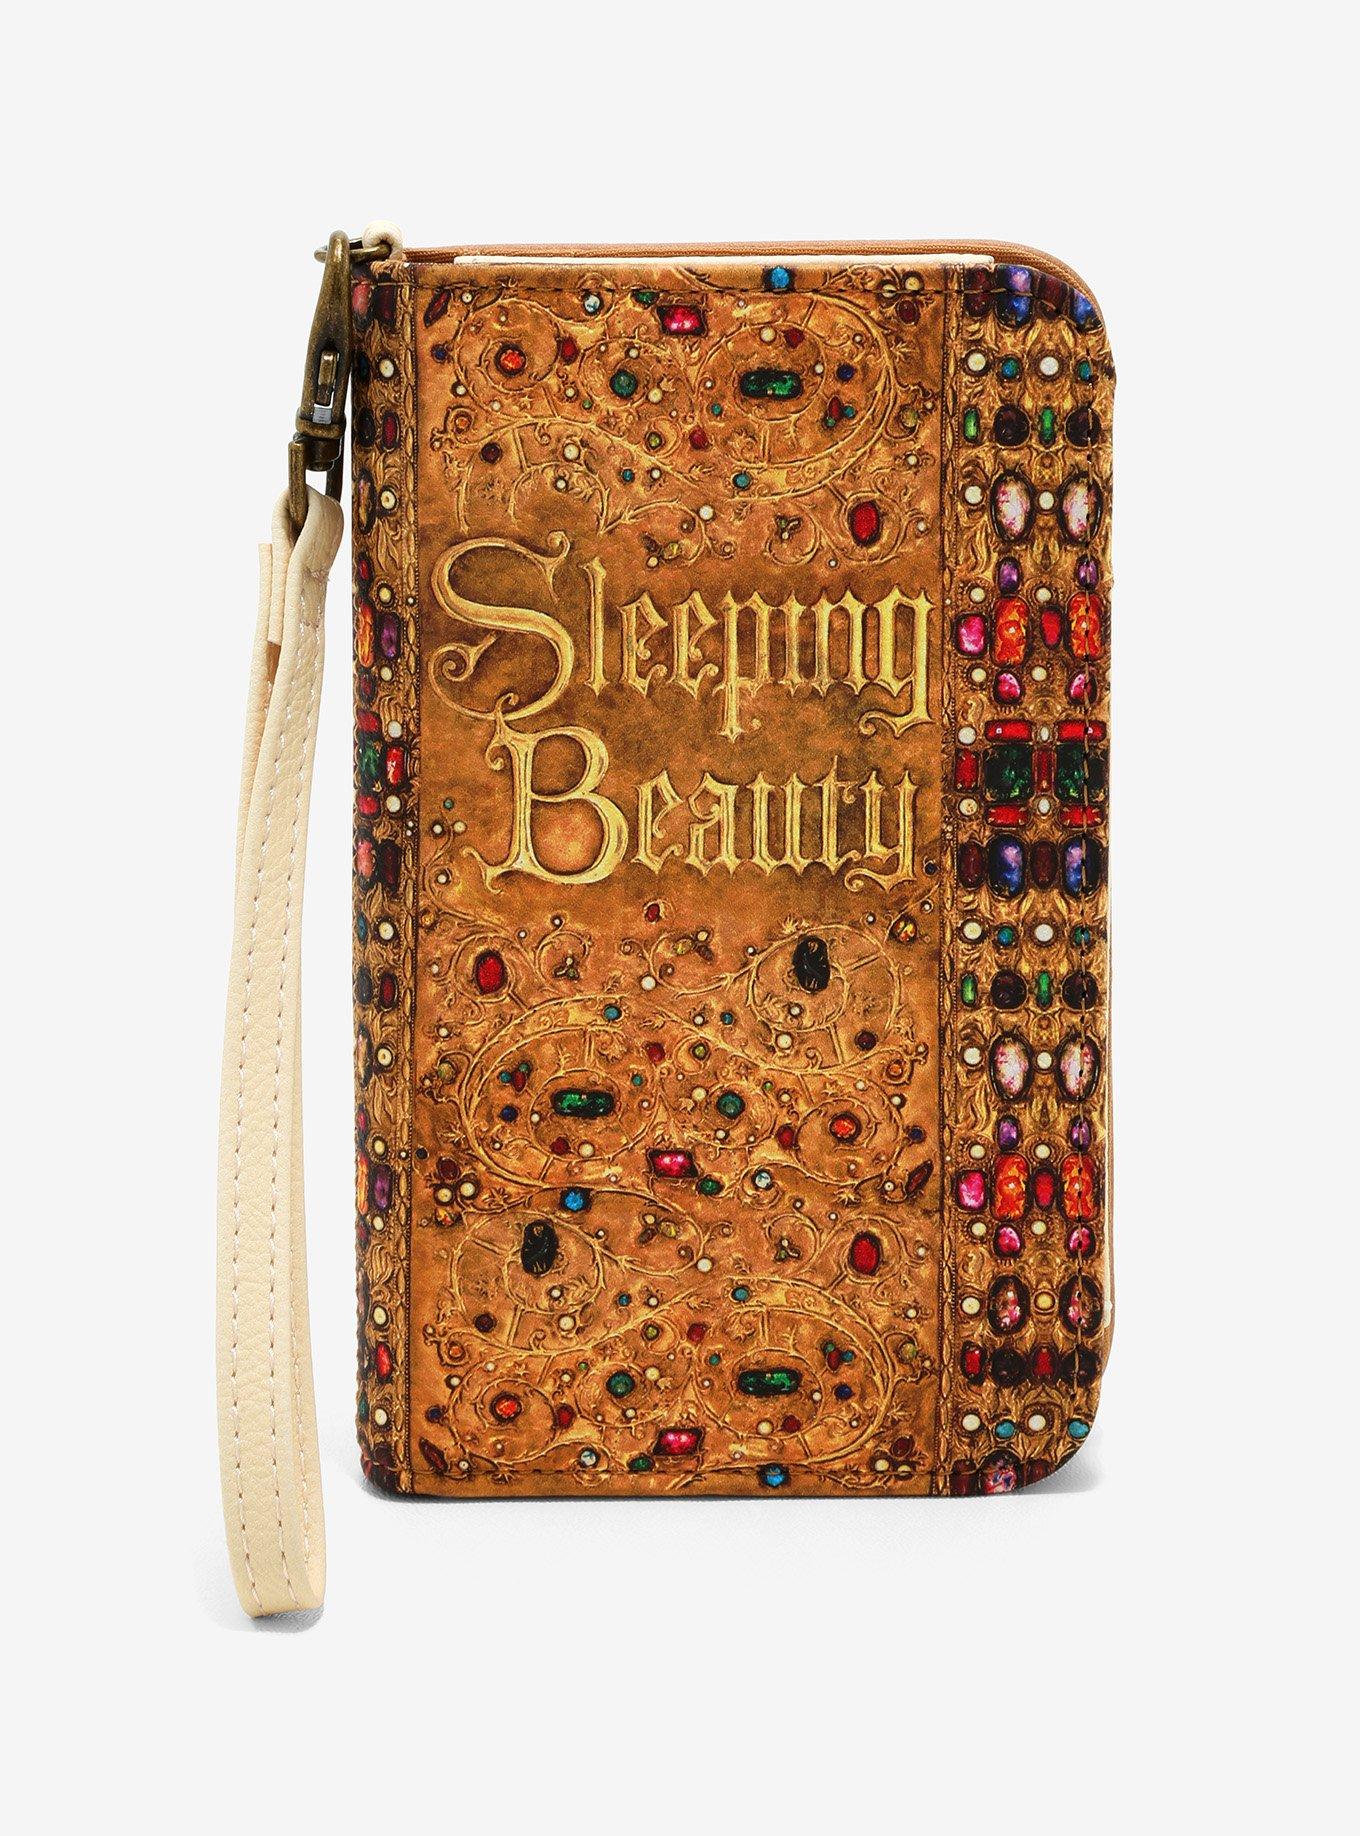 The Sleeping Beauty Book Purse